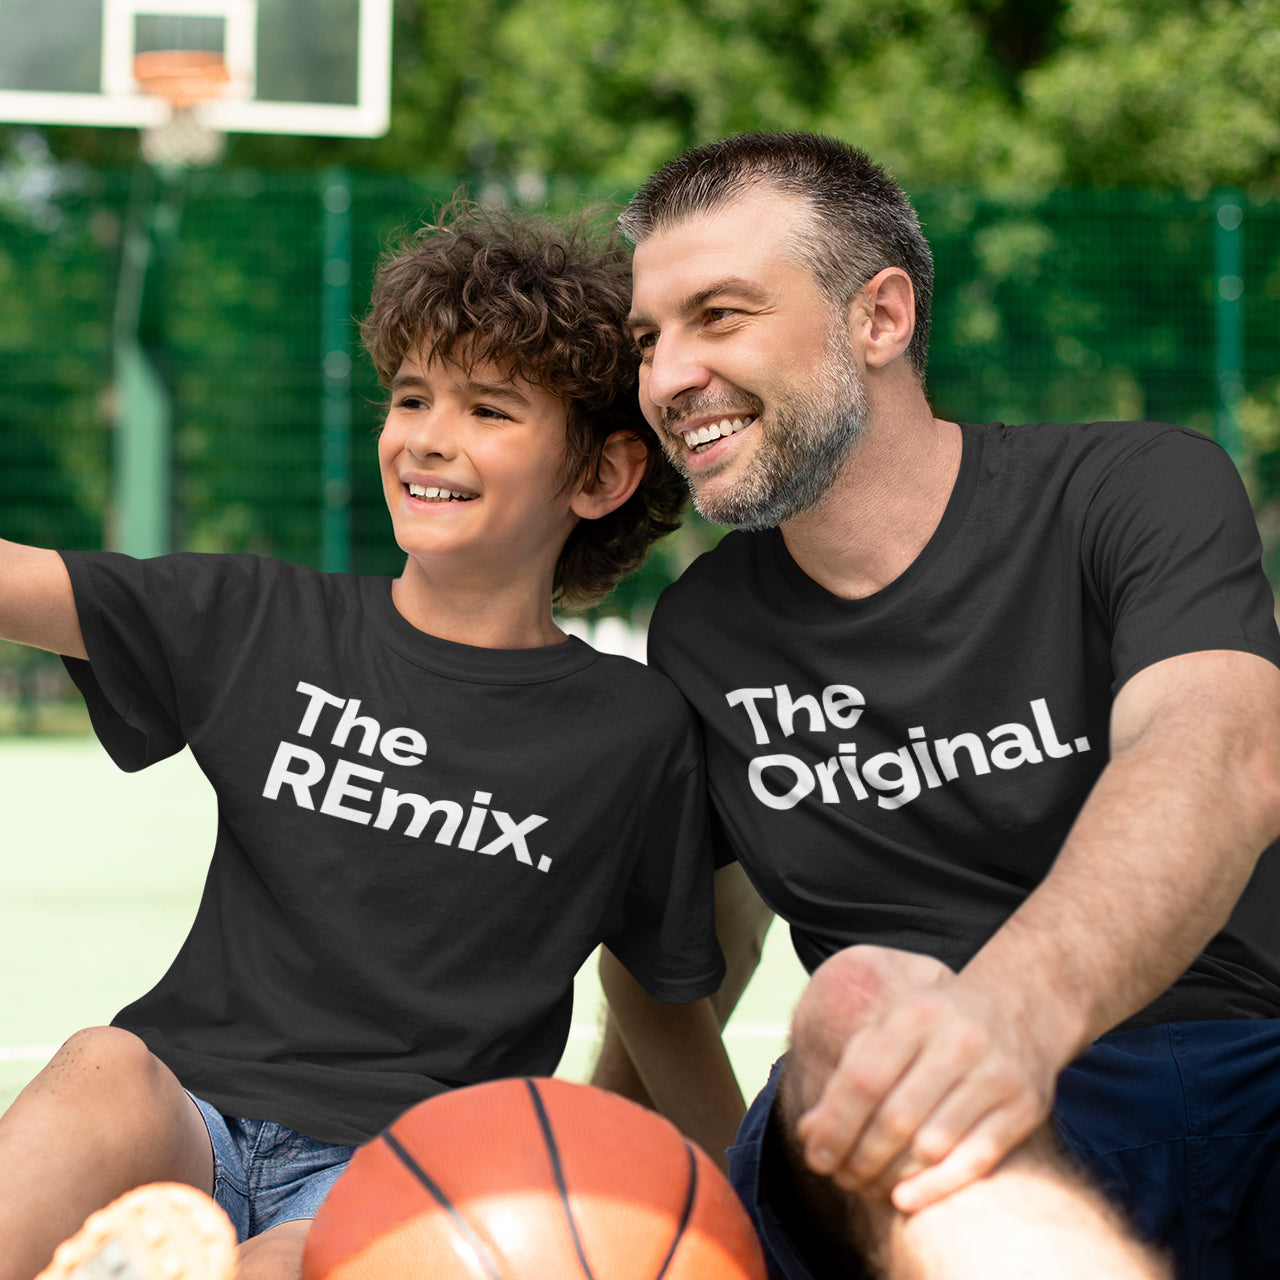 Camisetas Padre e Hijo. The Original y The Remix.